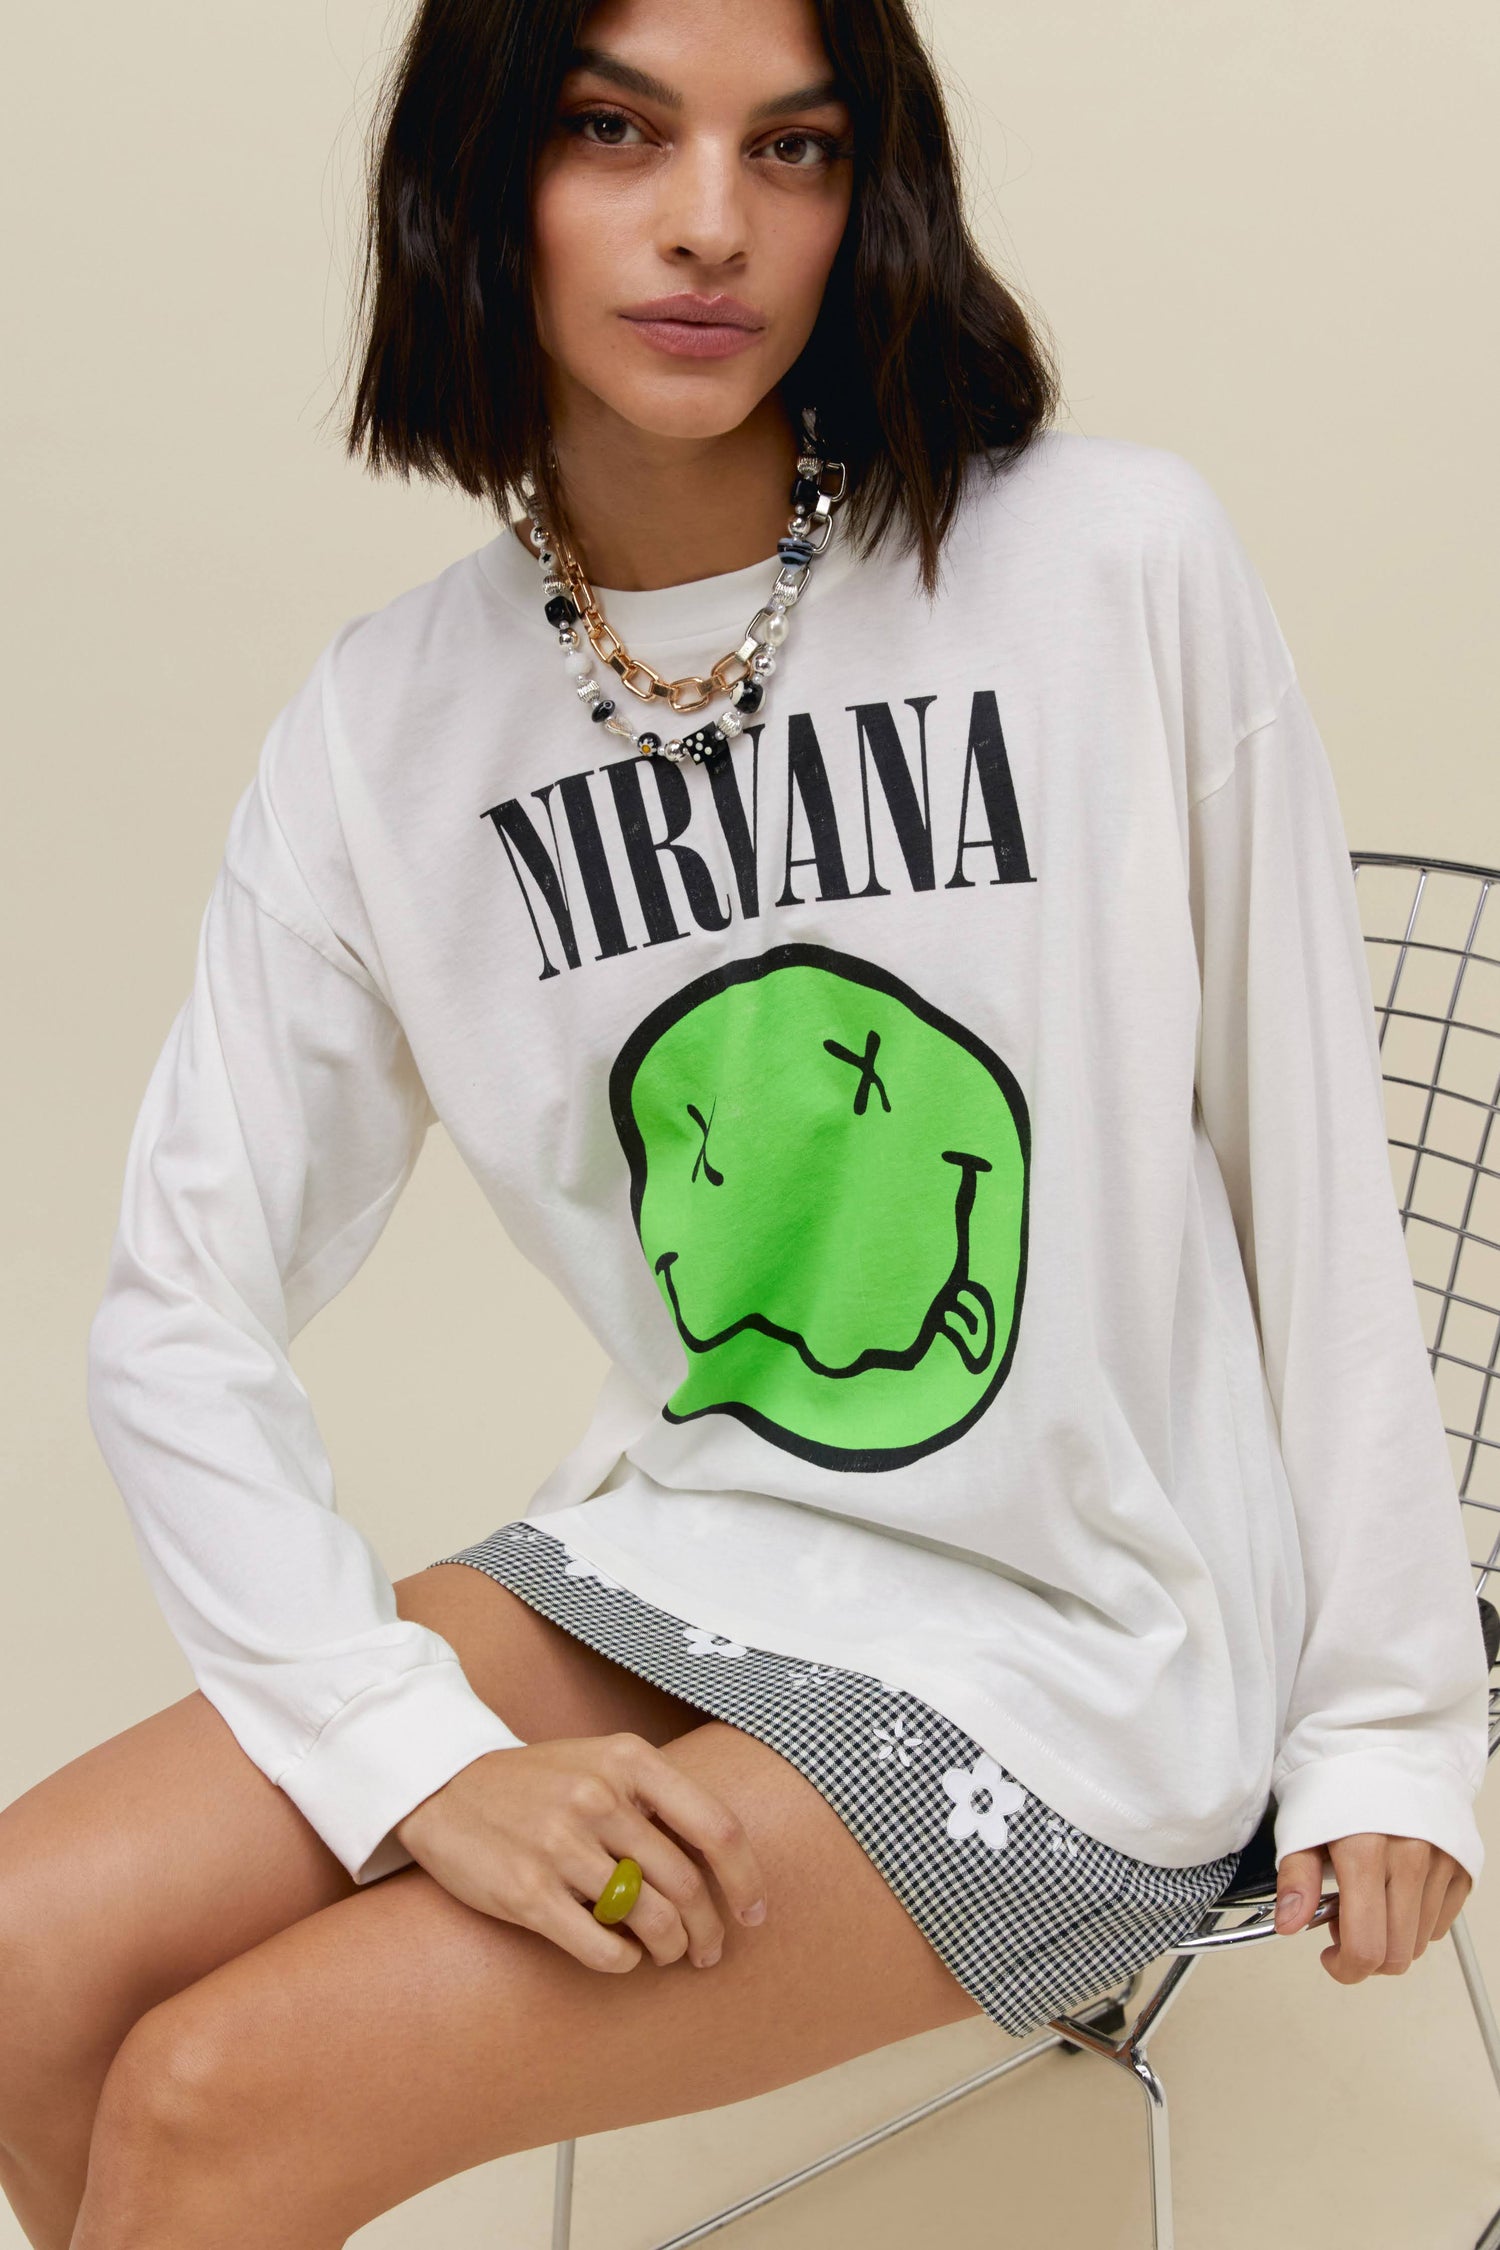 green and white Nirvana shirt